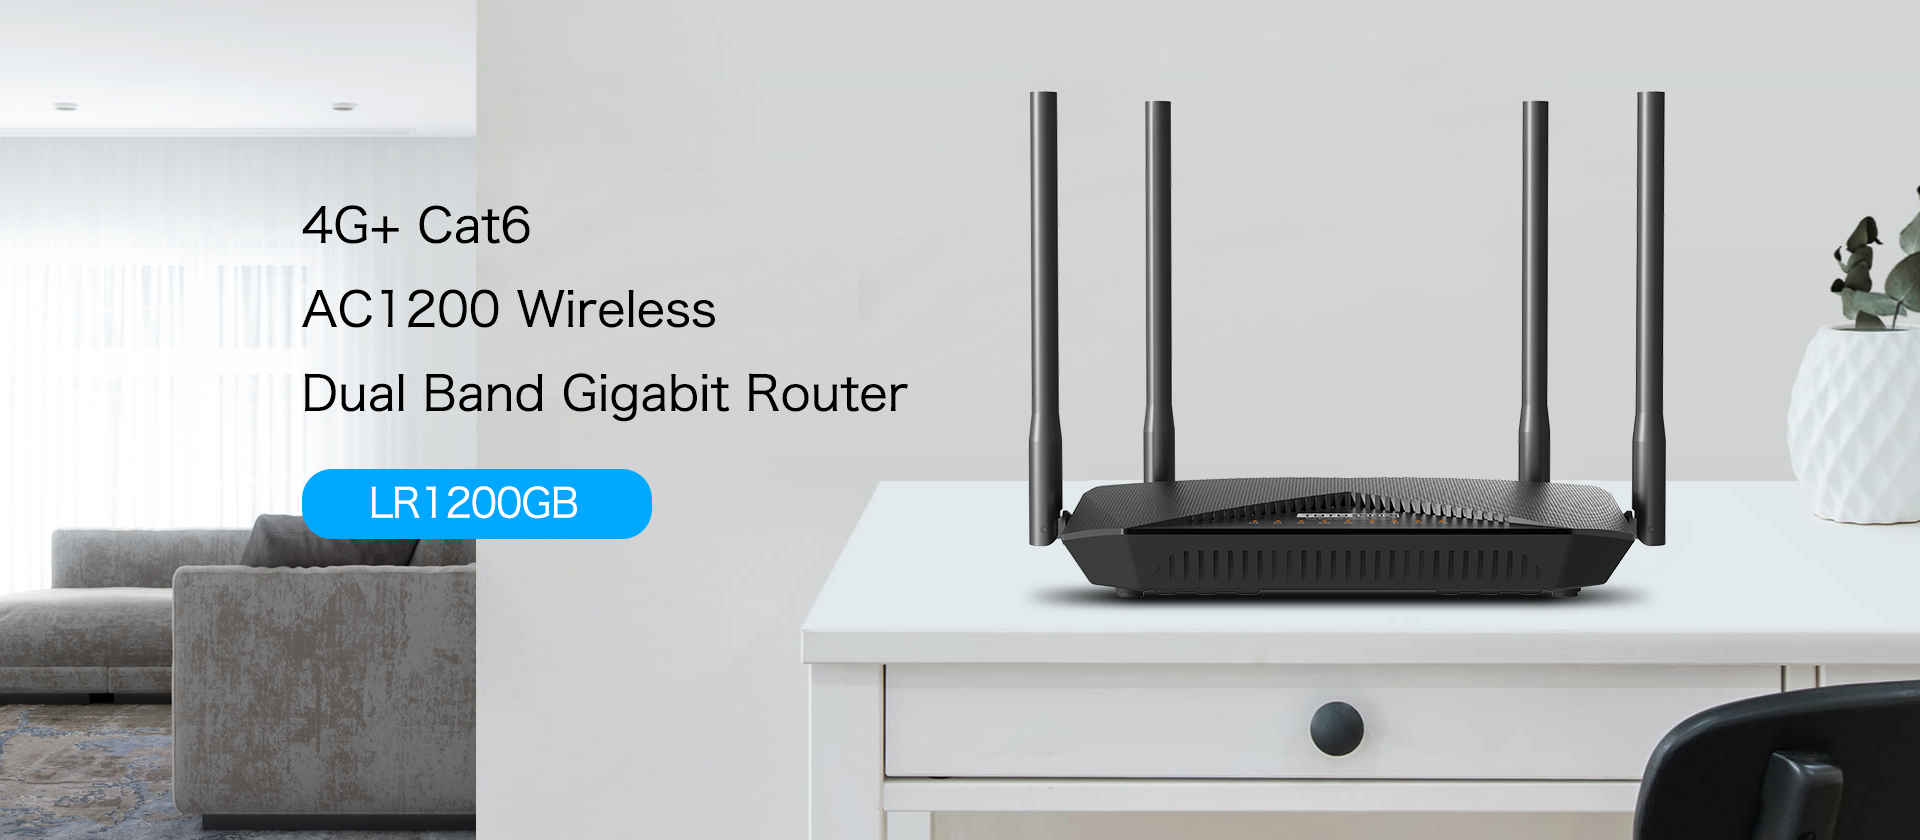 4G+ Cat6 AC1200 Wireless Dual Band Gigabit Router Dubai